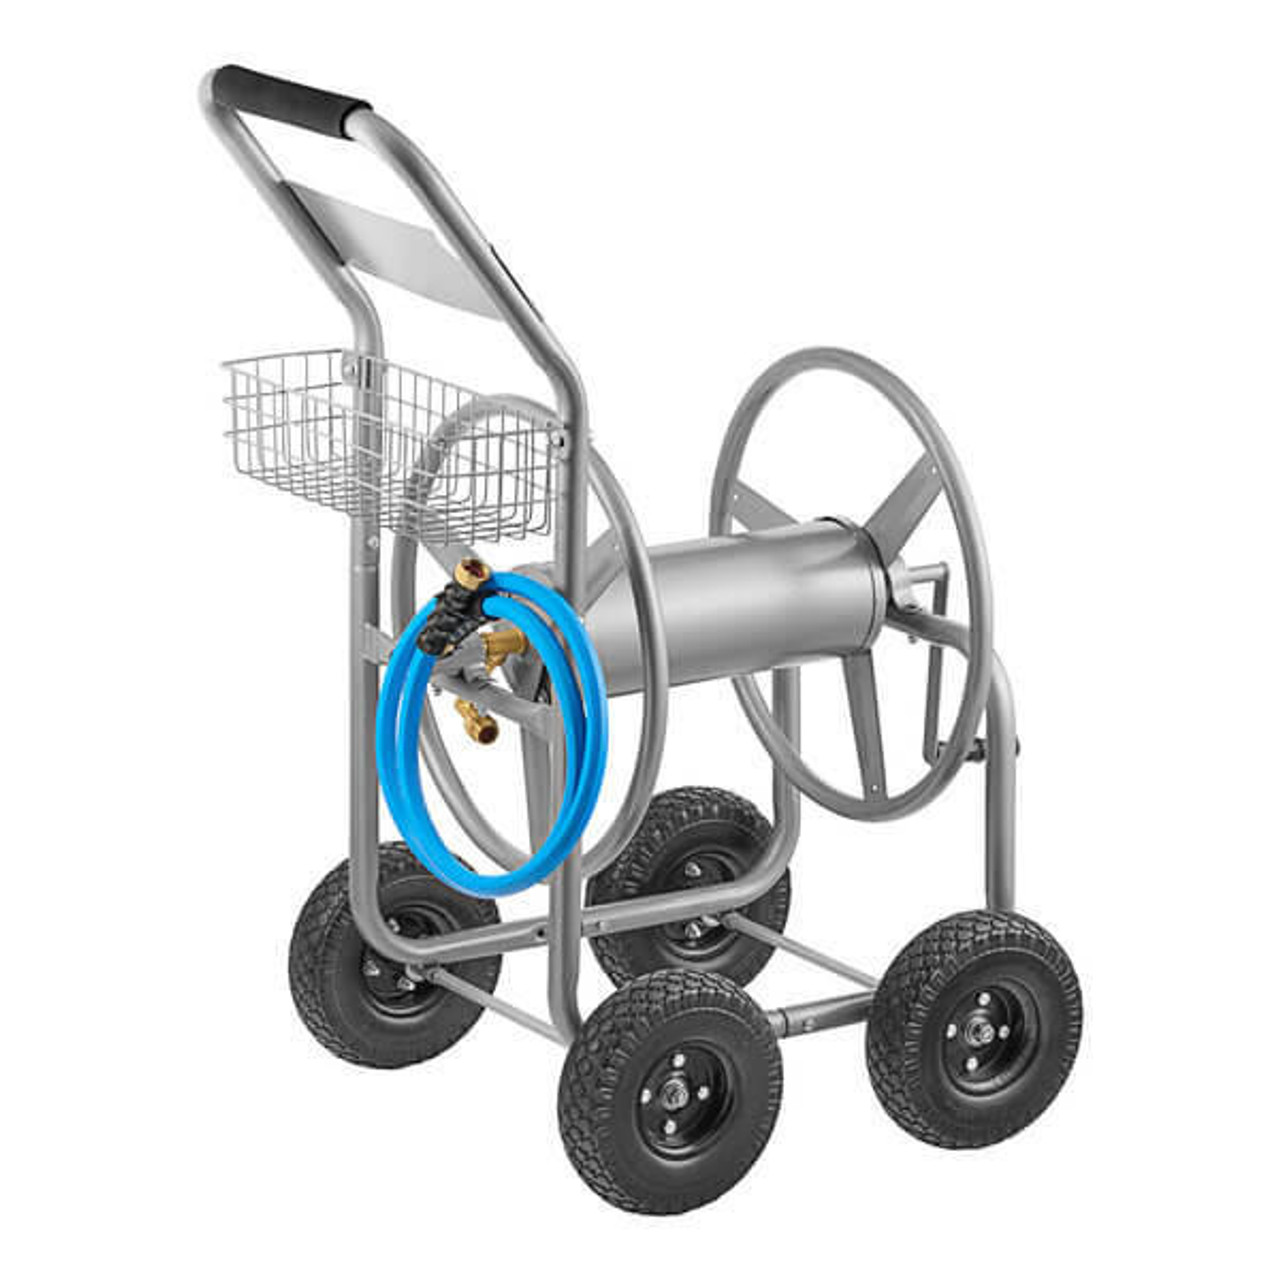 Industrial-Grade Garden Hose Reel Cart for Effortless Lawn and Garden Maintenance